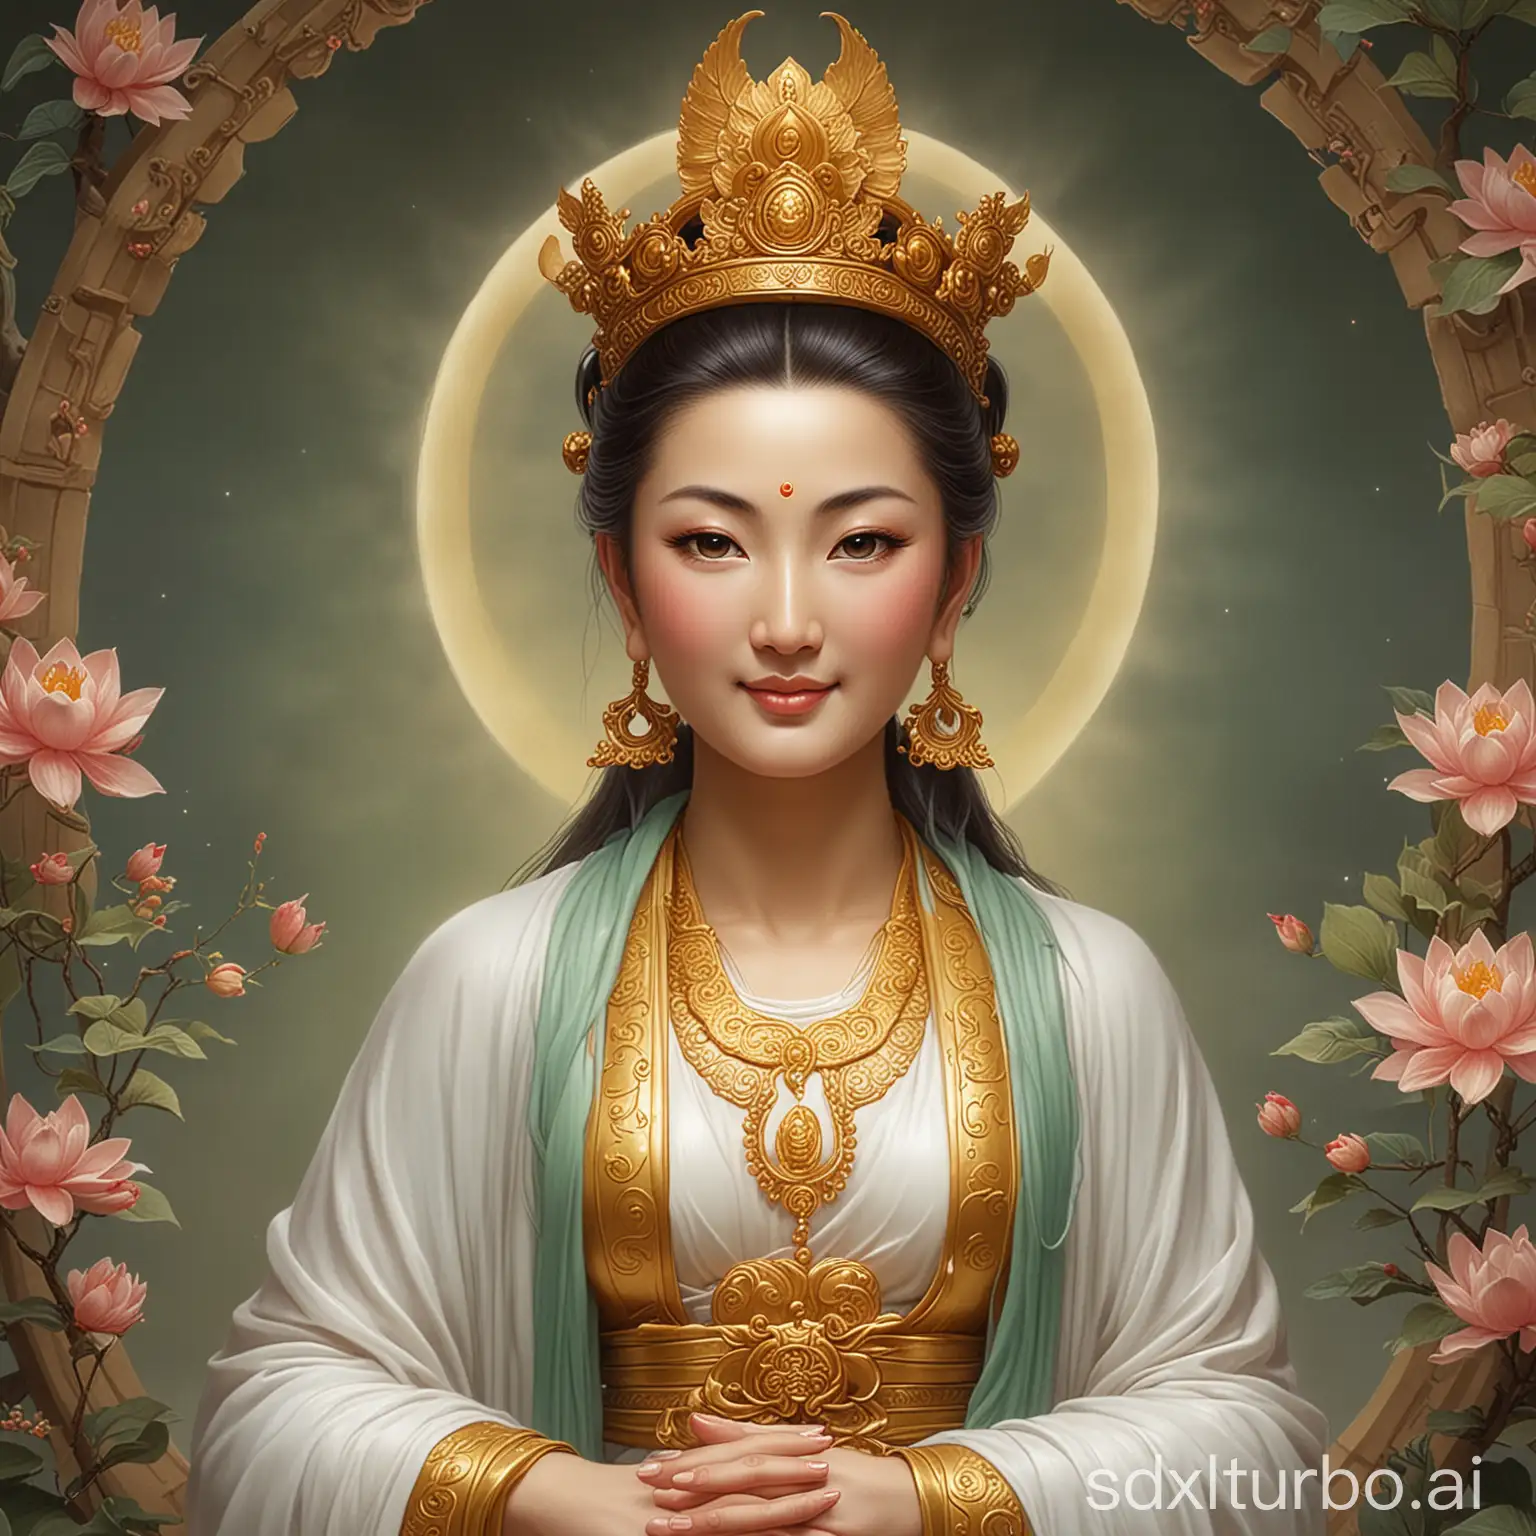 Smiling-Guanyin-Bodhisattva-Radiating-Wisdom-and-Compassion